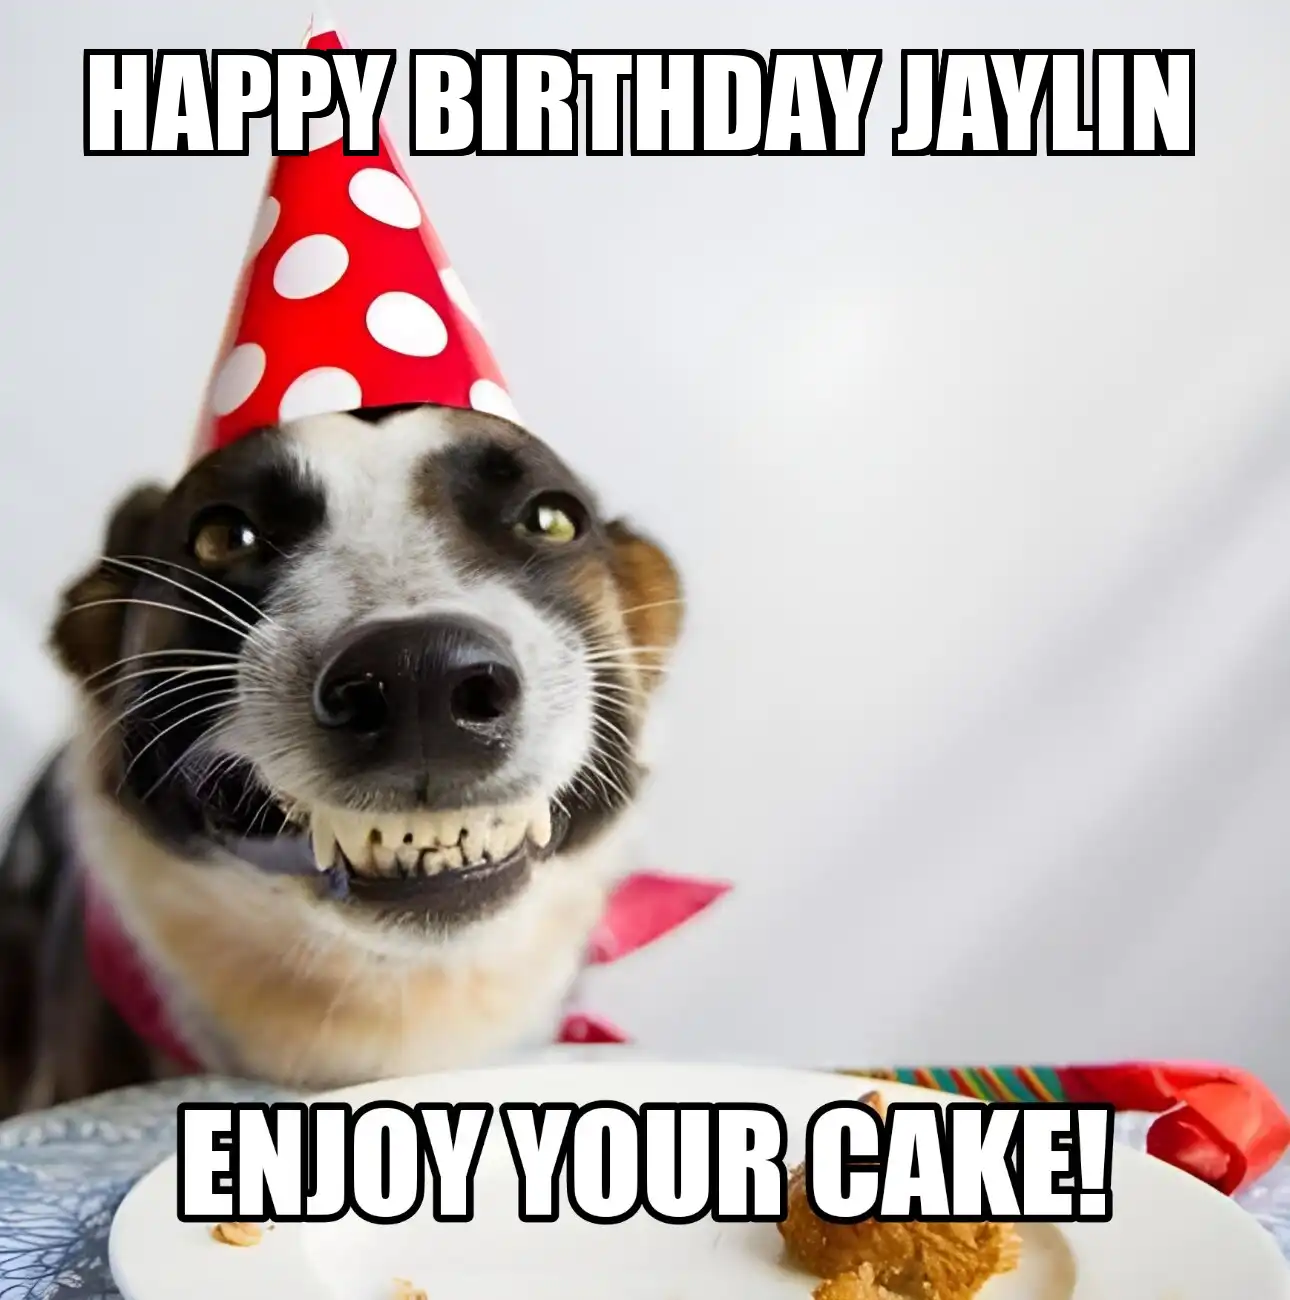 Happy Birthday Jaylin Enjoy Your Cake Dog Meme